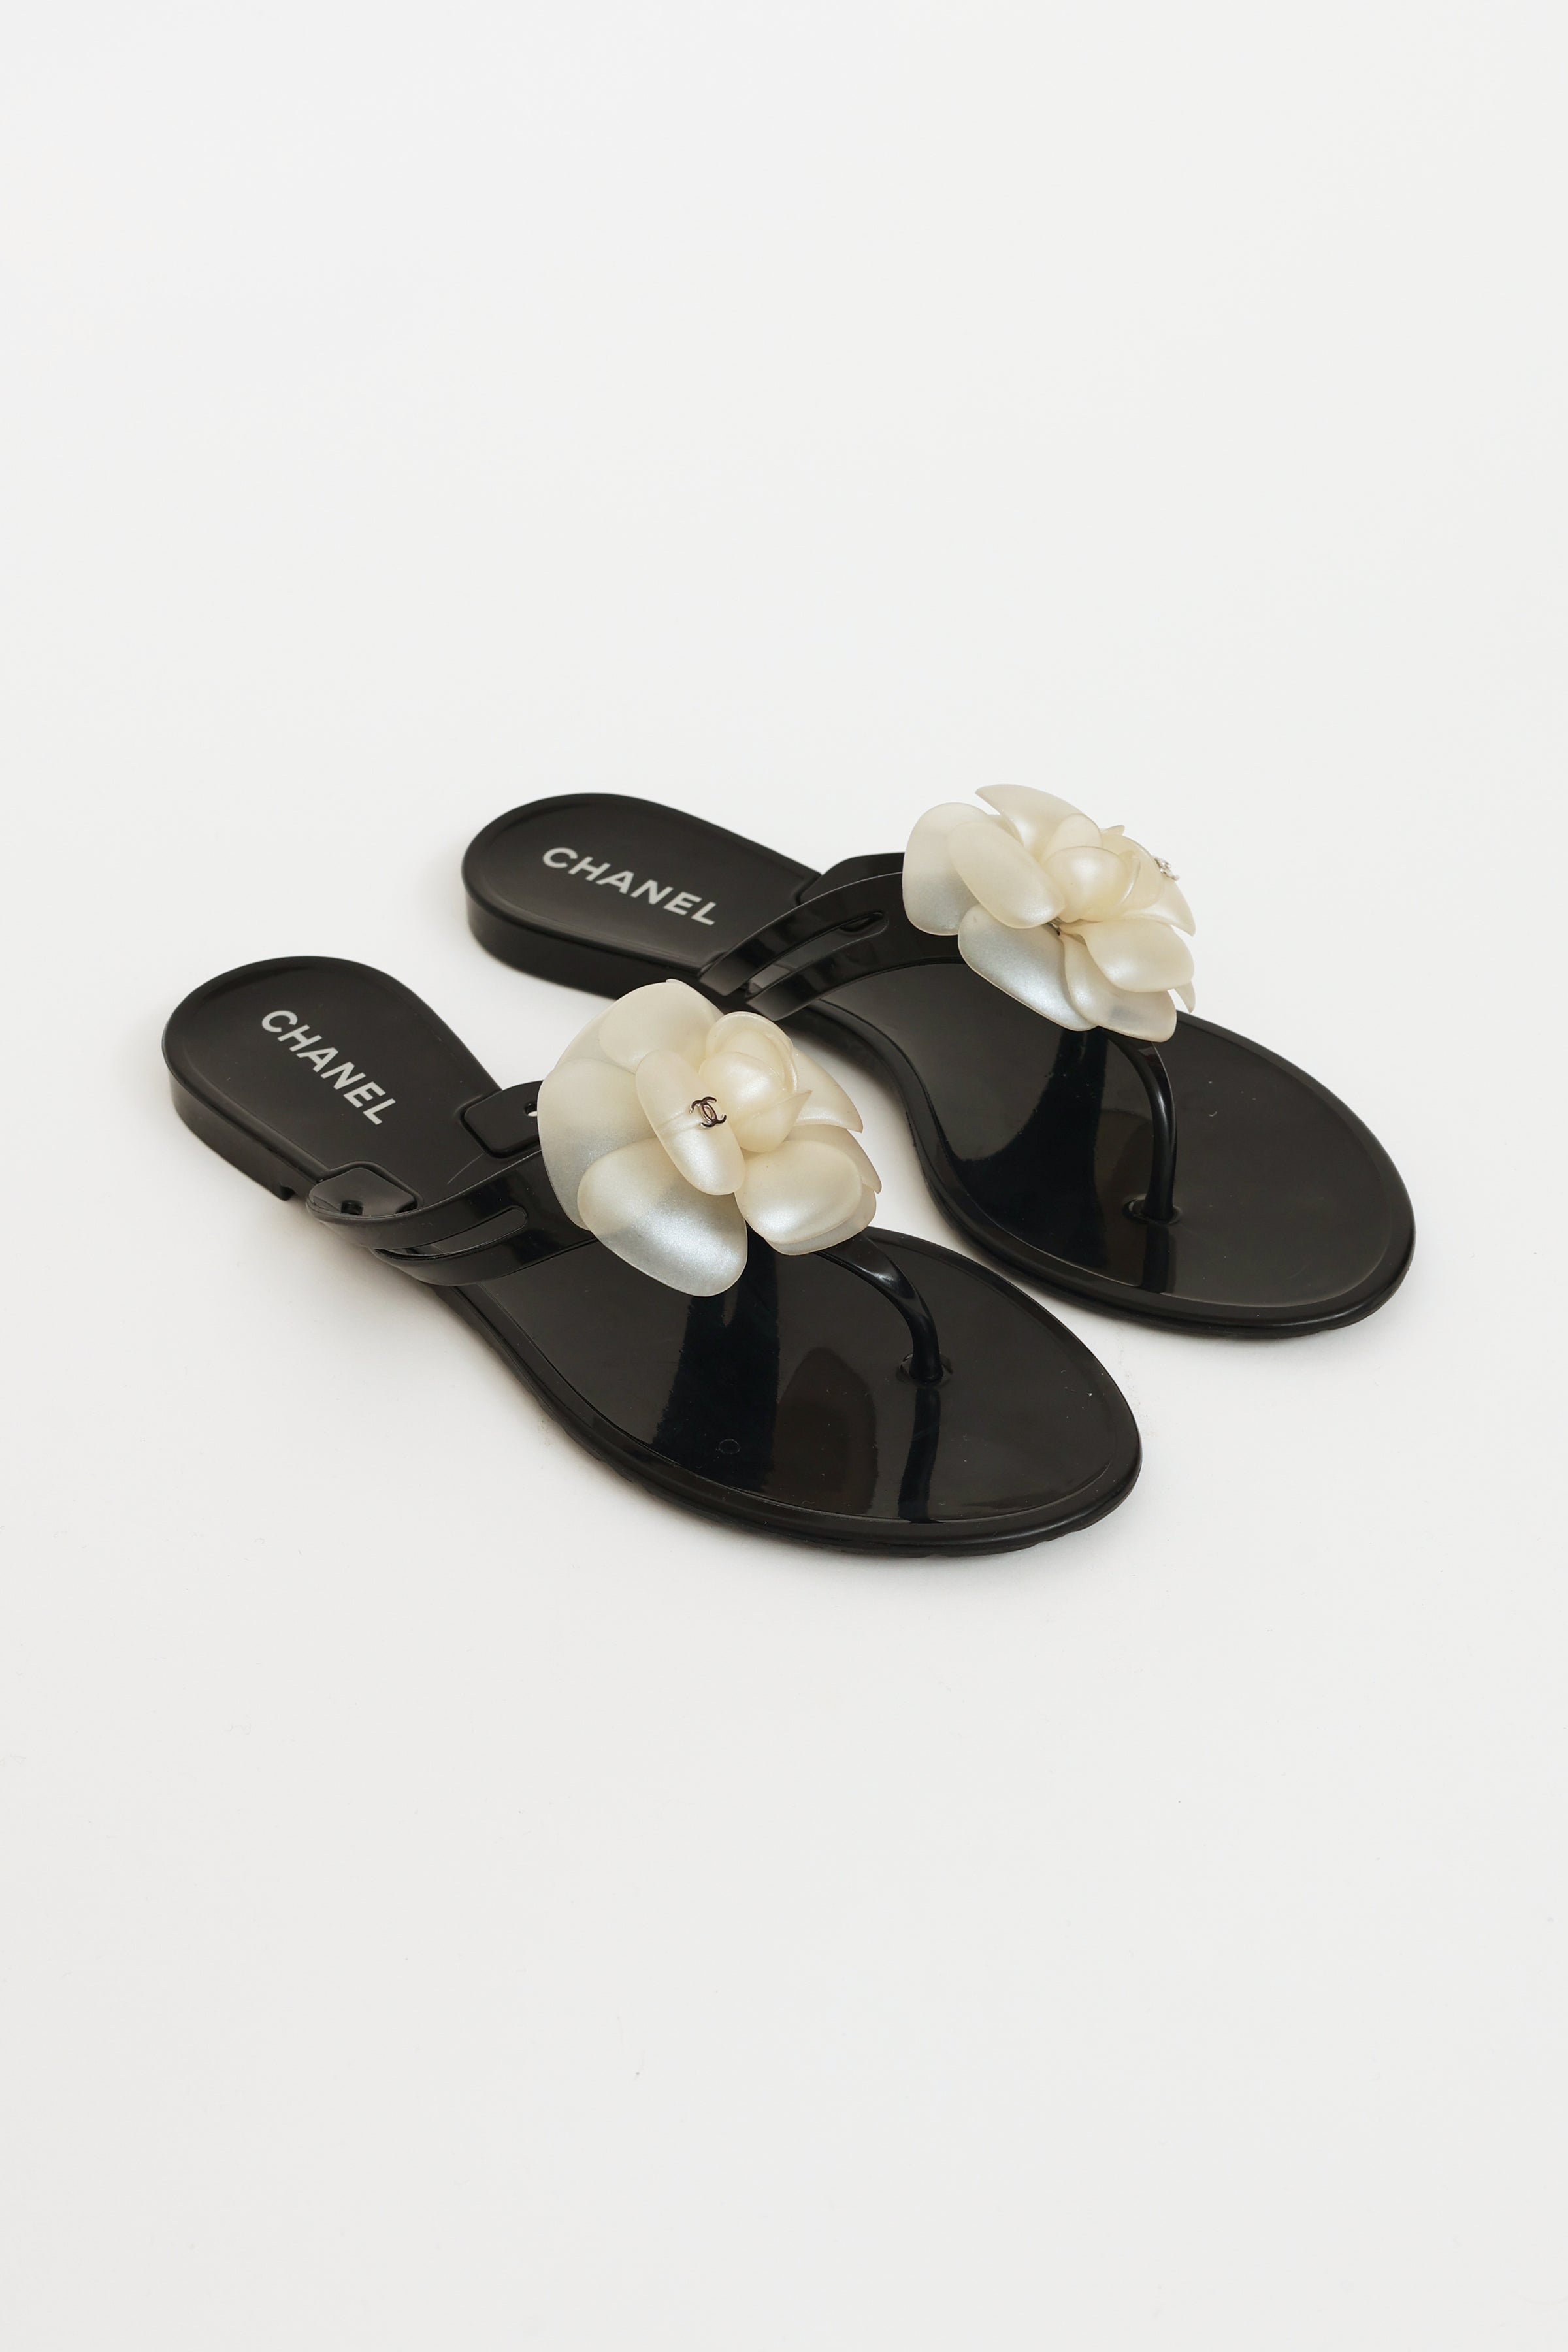 Chanel Gold Glitter Rubber Camellia Flower Sandals Size 6.5/37